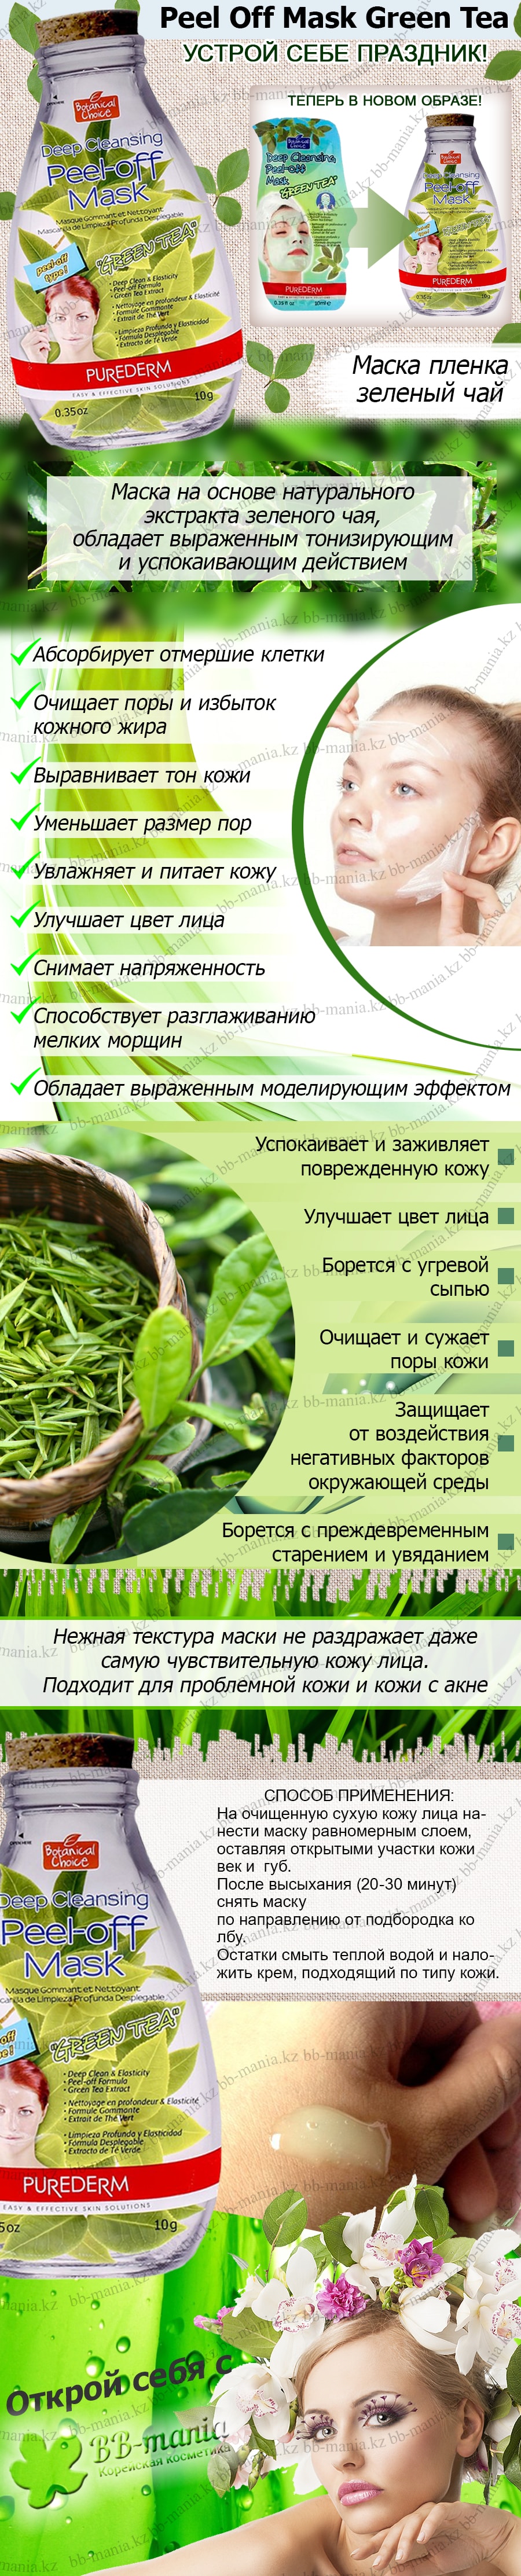 Peel-Off-Mask-Green-Tea-[Purederm]bbmania-min